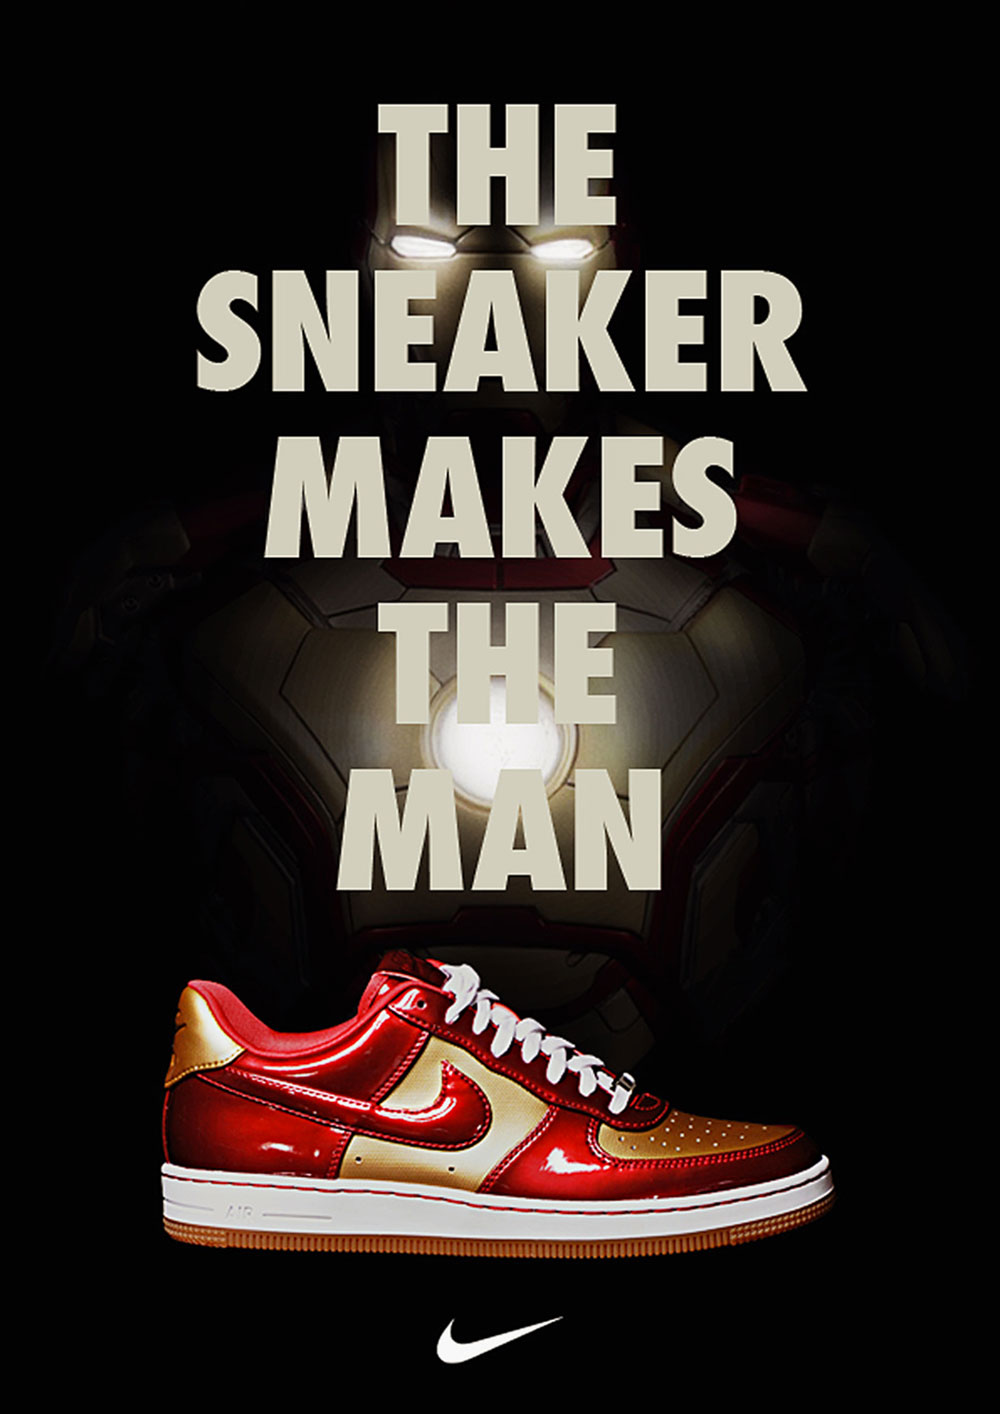 Nike shoes brand print ads